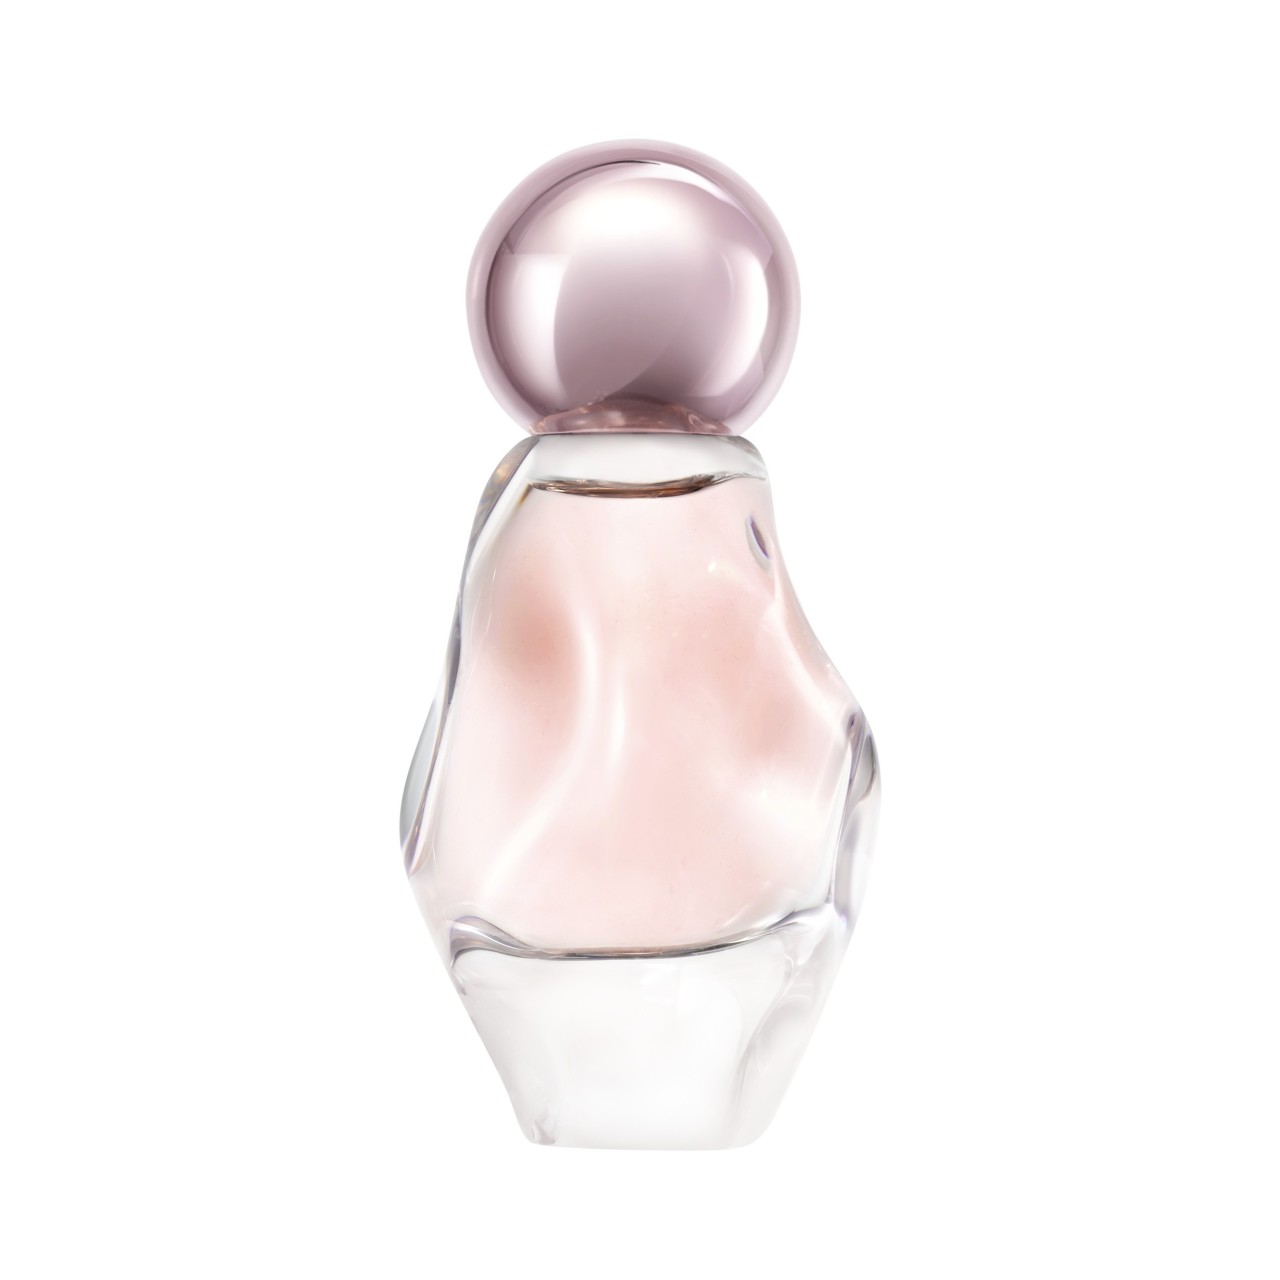 Kylie Jenner Fragrances - Cosmic Kylie Jenner Eau de Parfum Spray -  100 ml